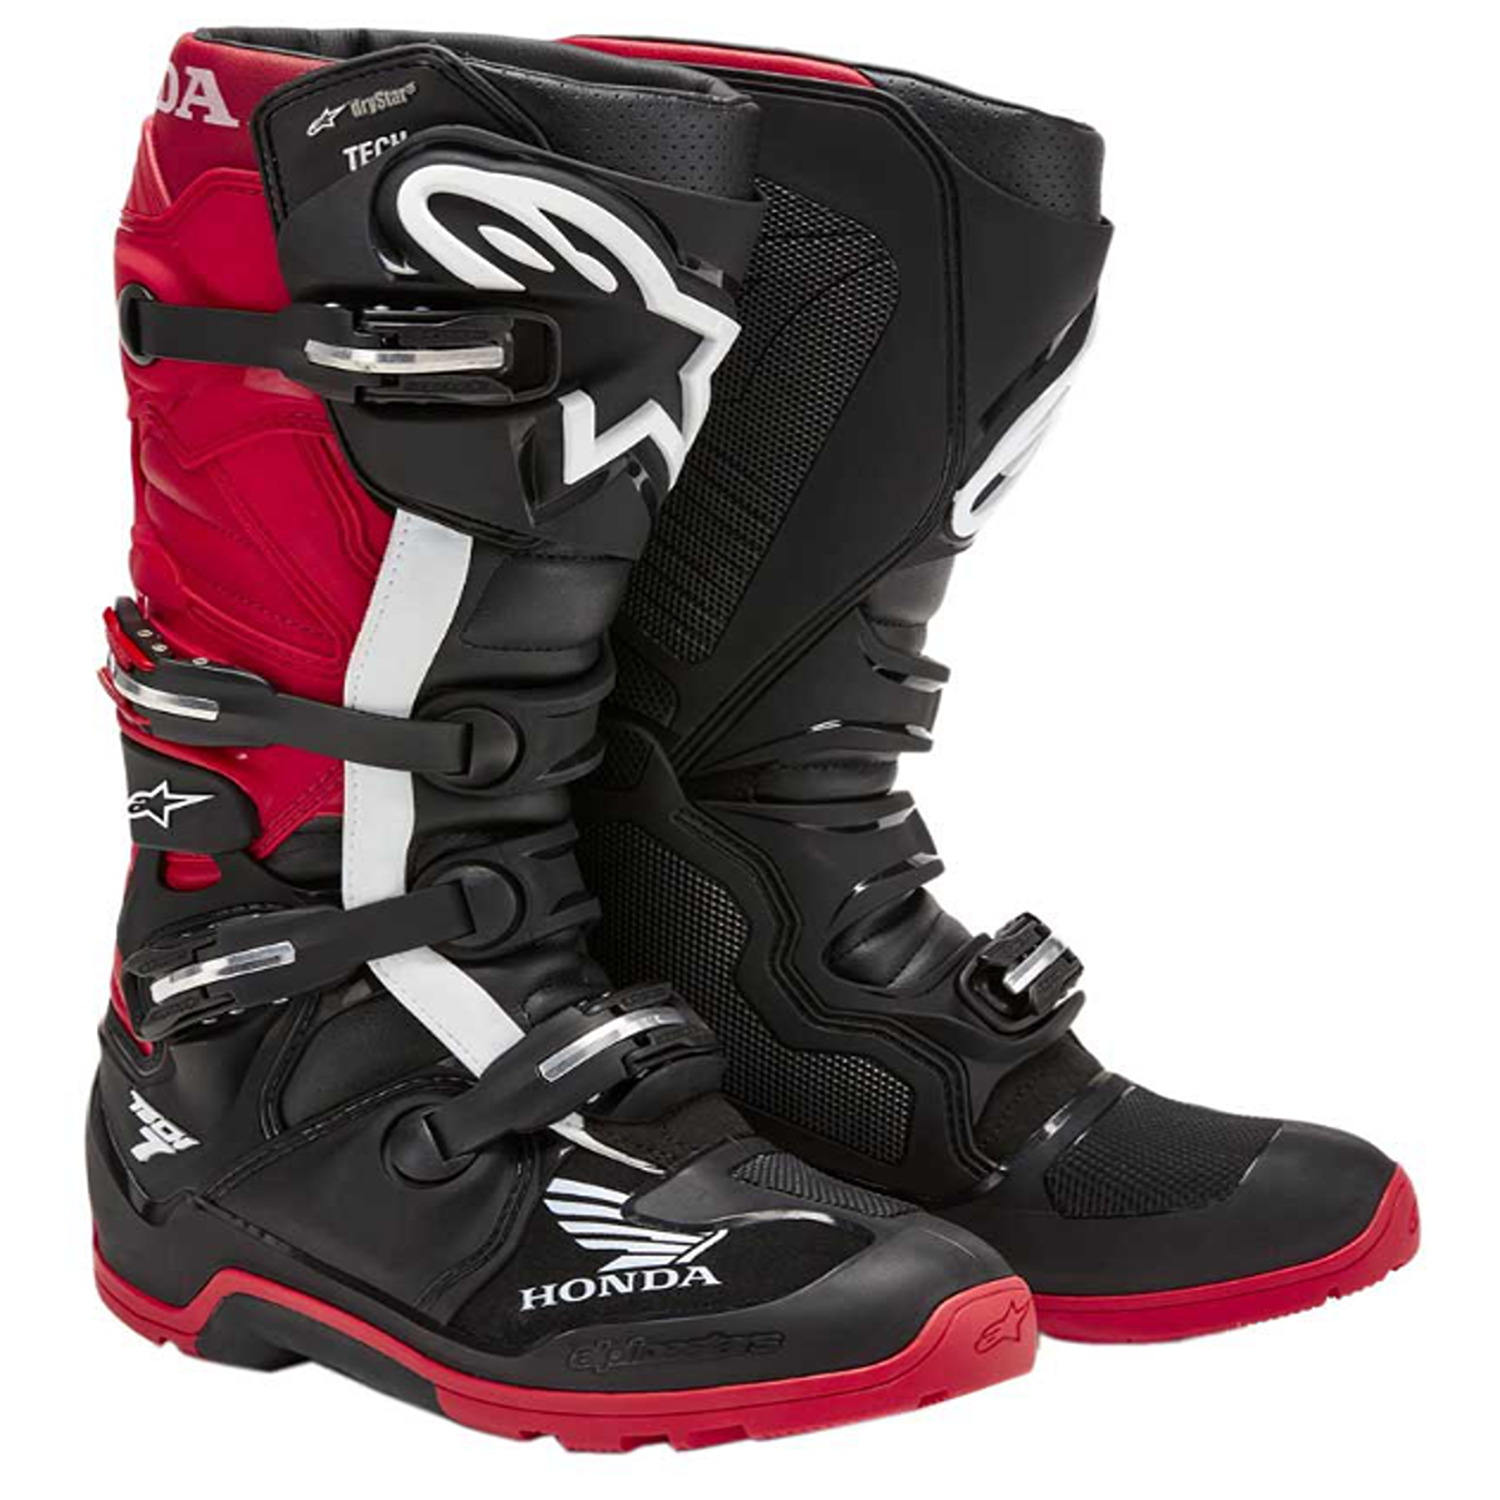 Image of Alpinestars Honda Tech 7 Enduro Drystar Boots Black Bright Red Taille US 5